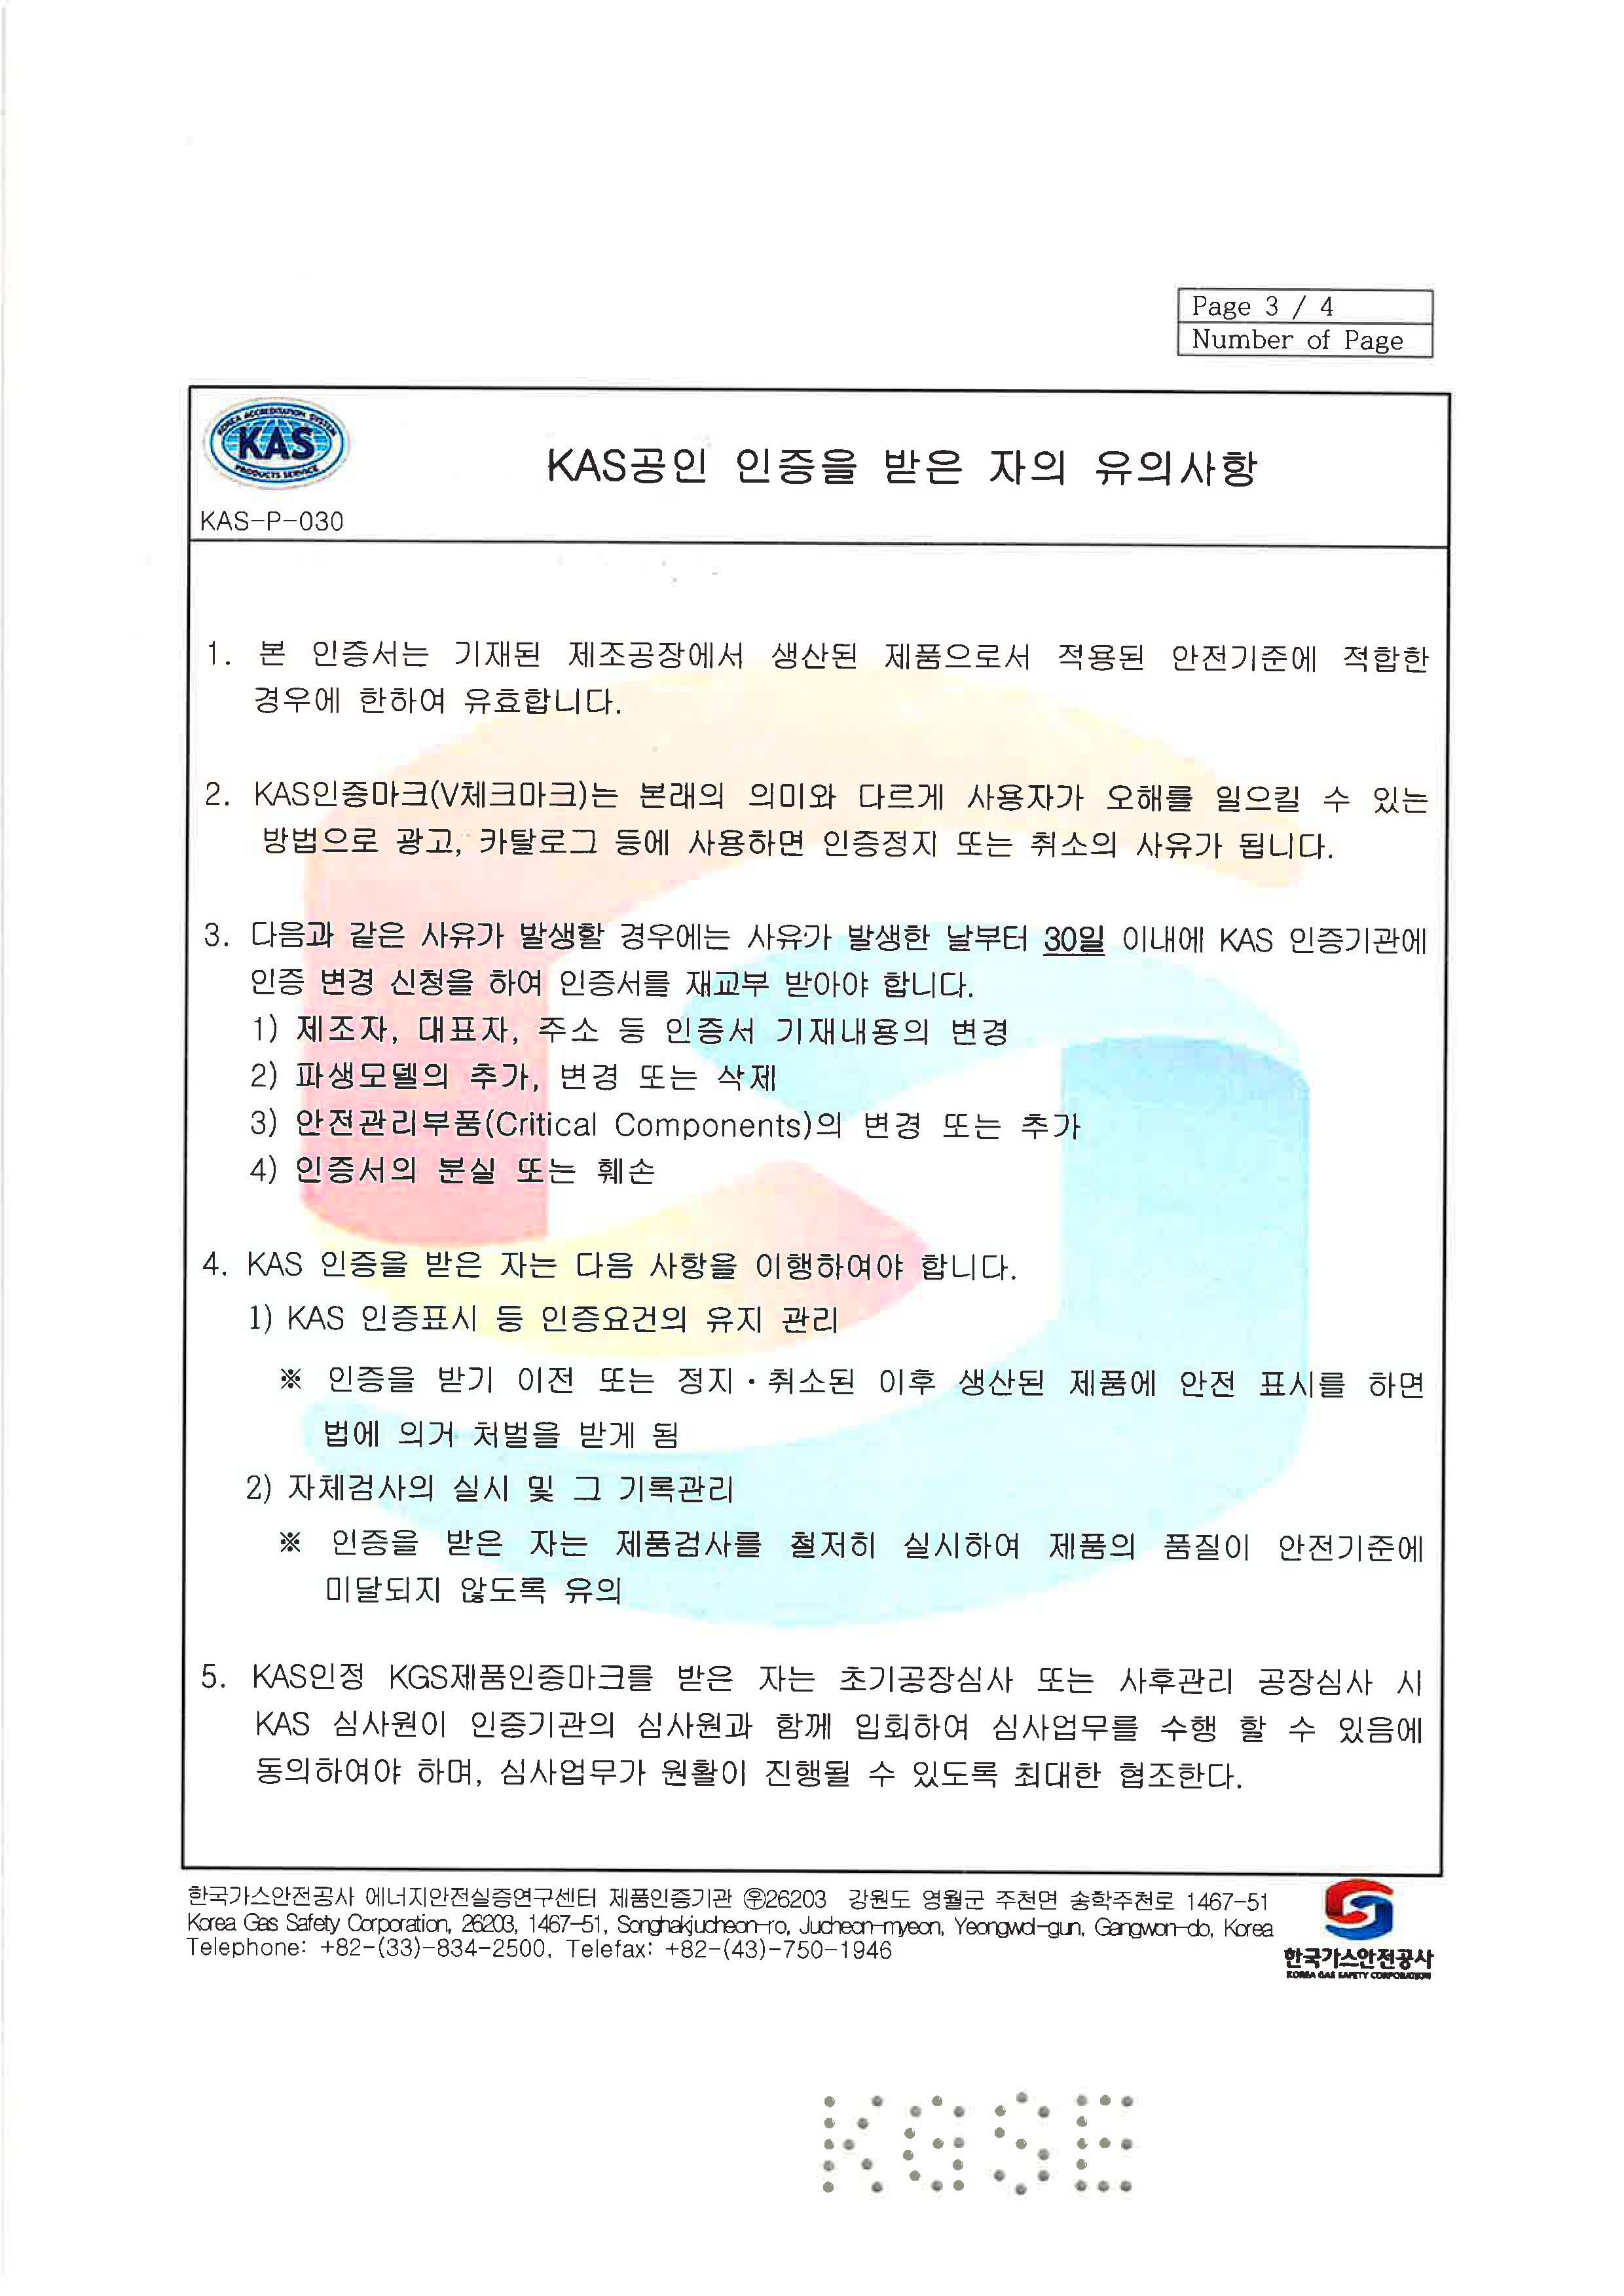 KAS공인 V체크마크 인증서 (스윙 방폭문 제품인증서)_페이지_3.jpg